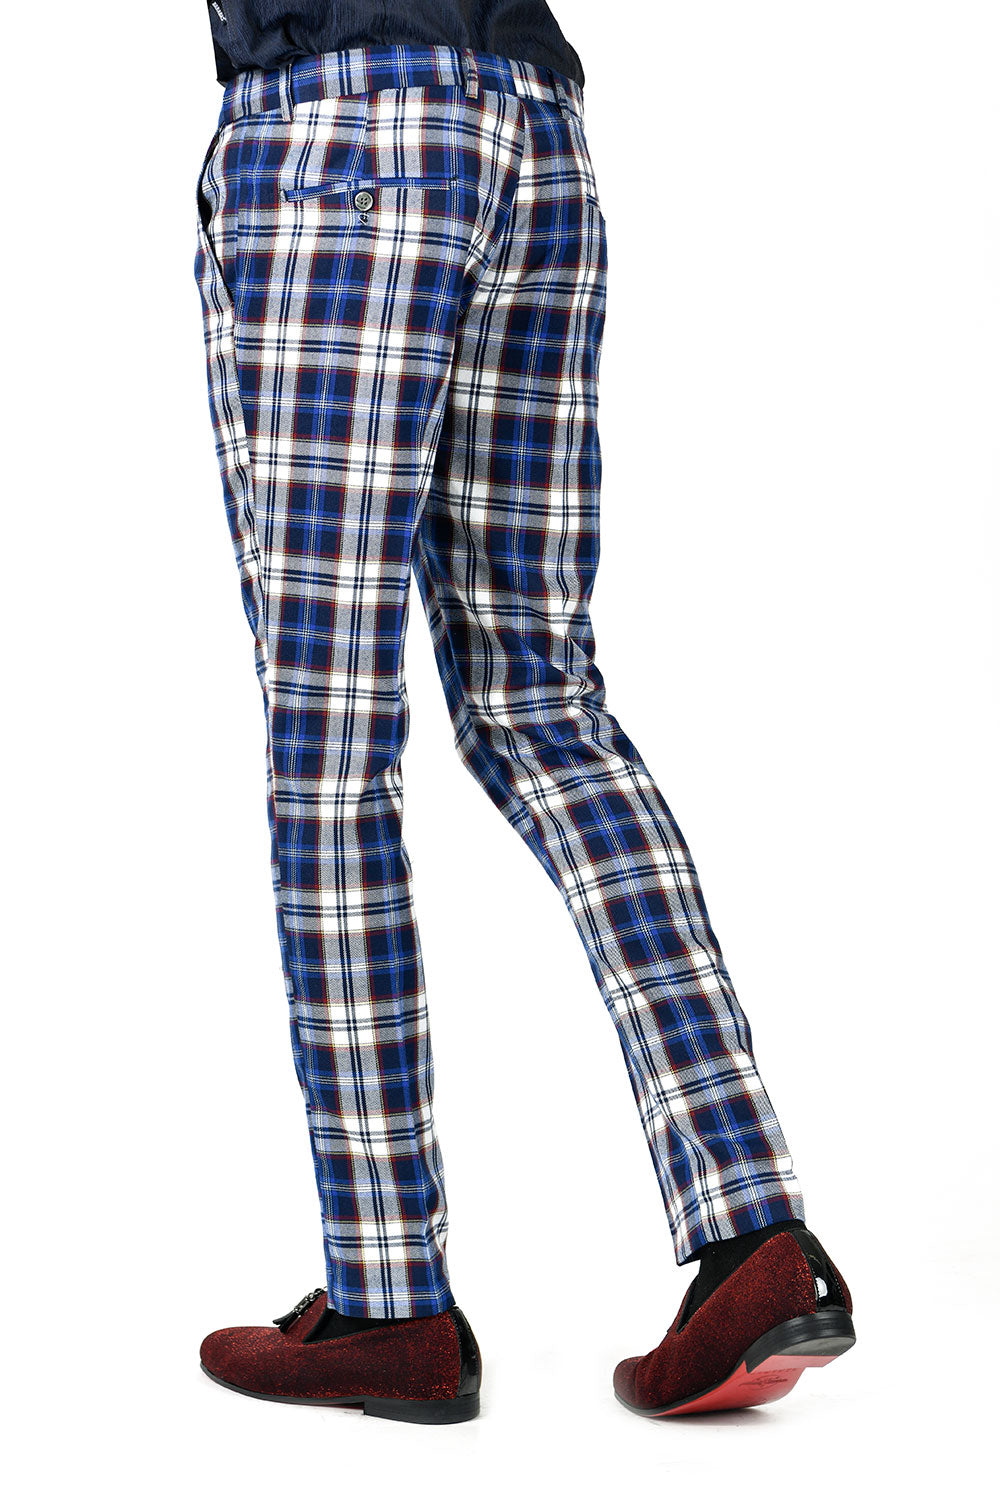 BARABAS men's checkered plaid blue white chino pants CP46